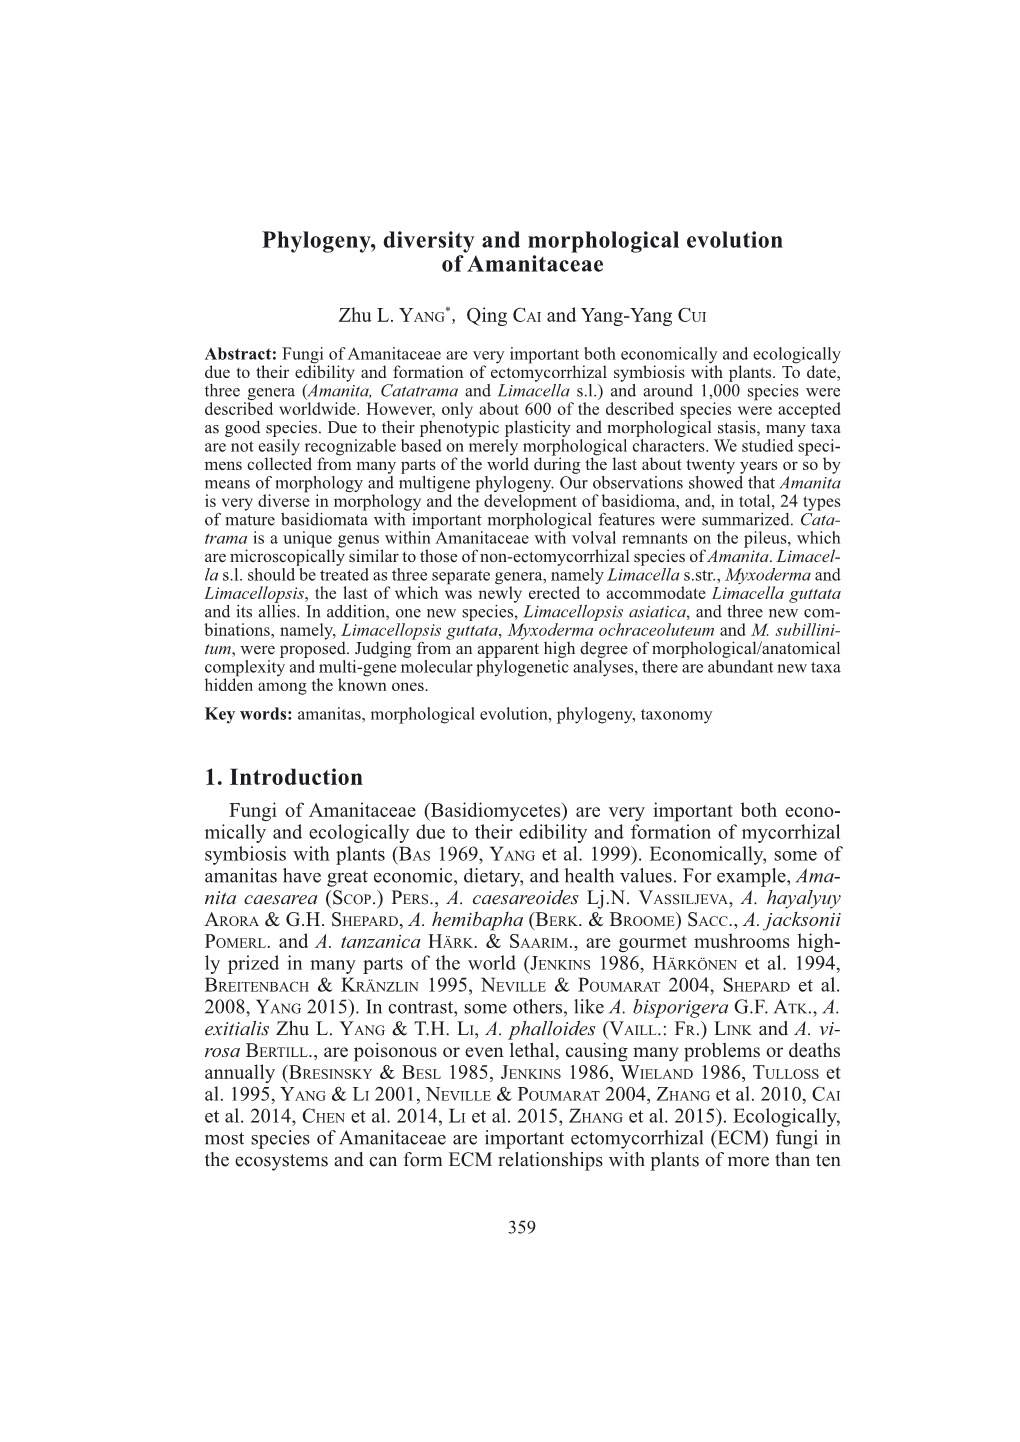 Phylogeny, Diversity and Morphological Evolution of Amanitaceae